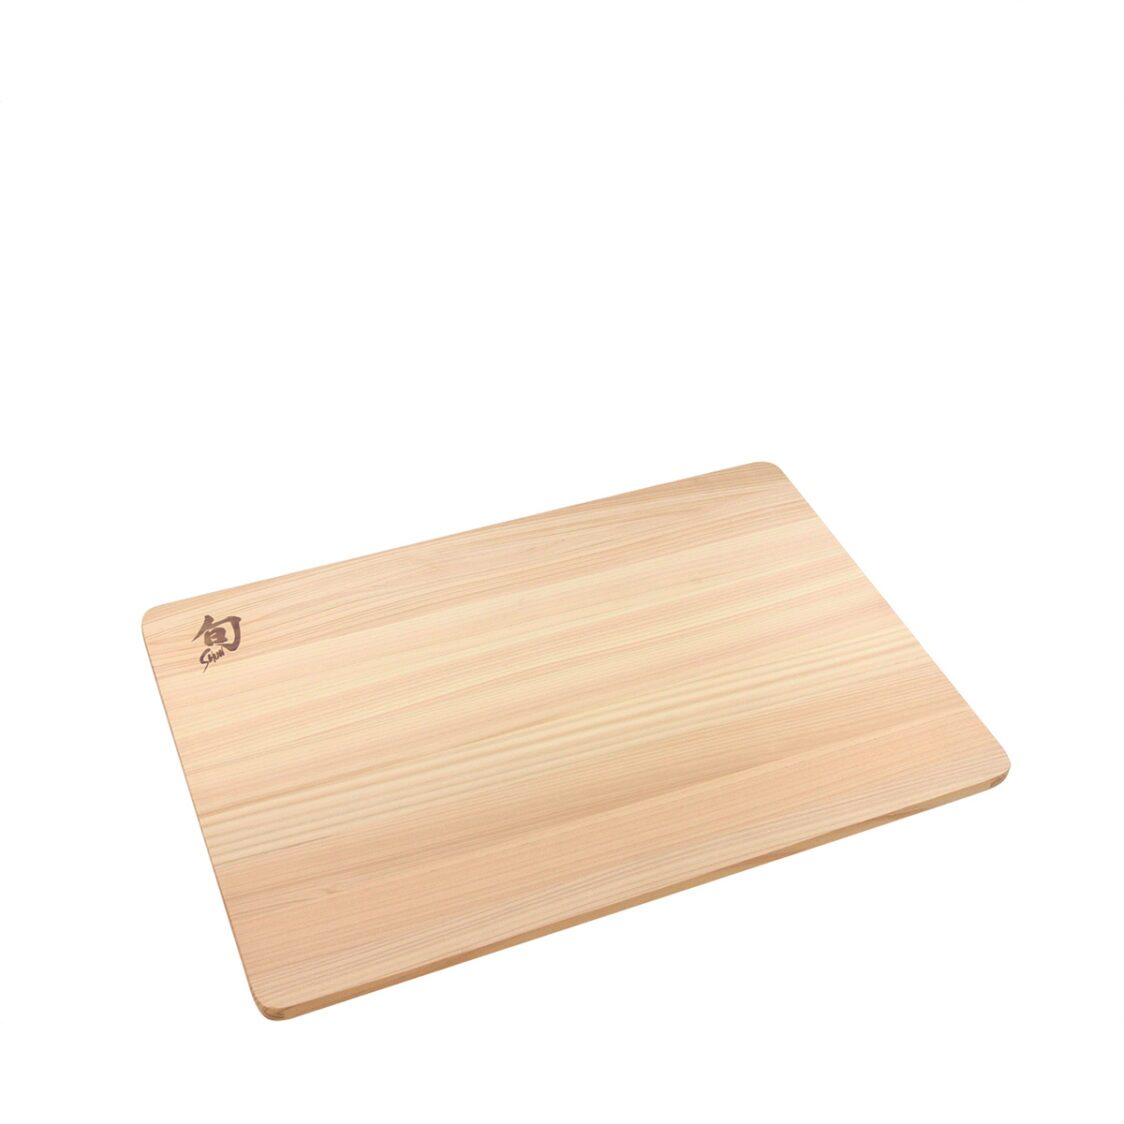 Kai Shun Hinoki Cutting Board - Thin Type - L Size Made In Japan DM-0812